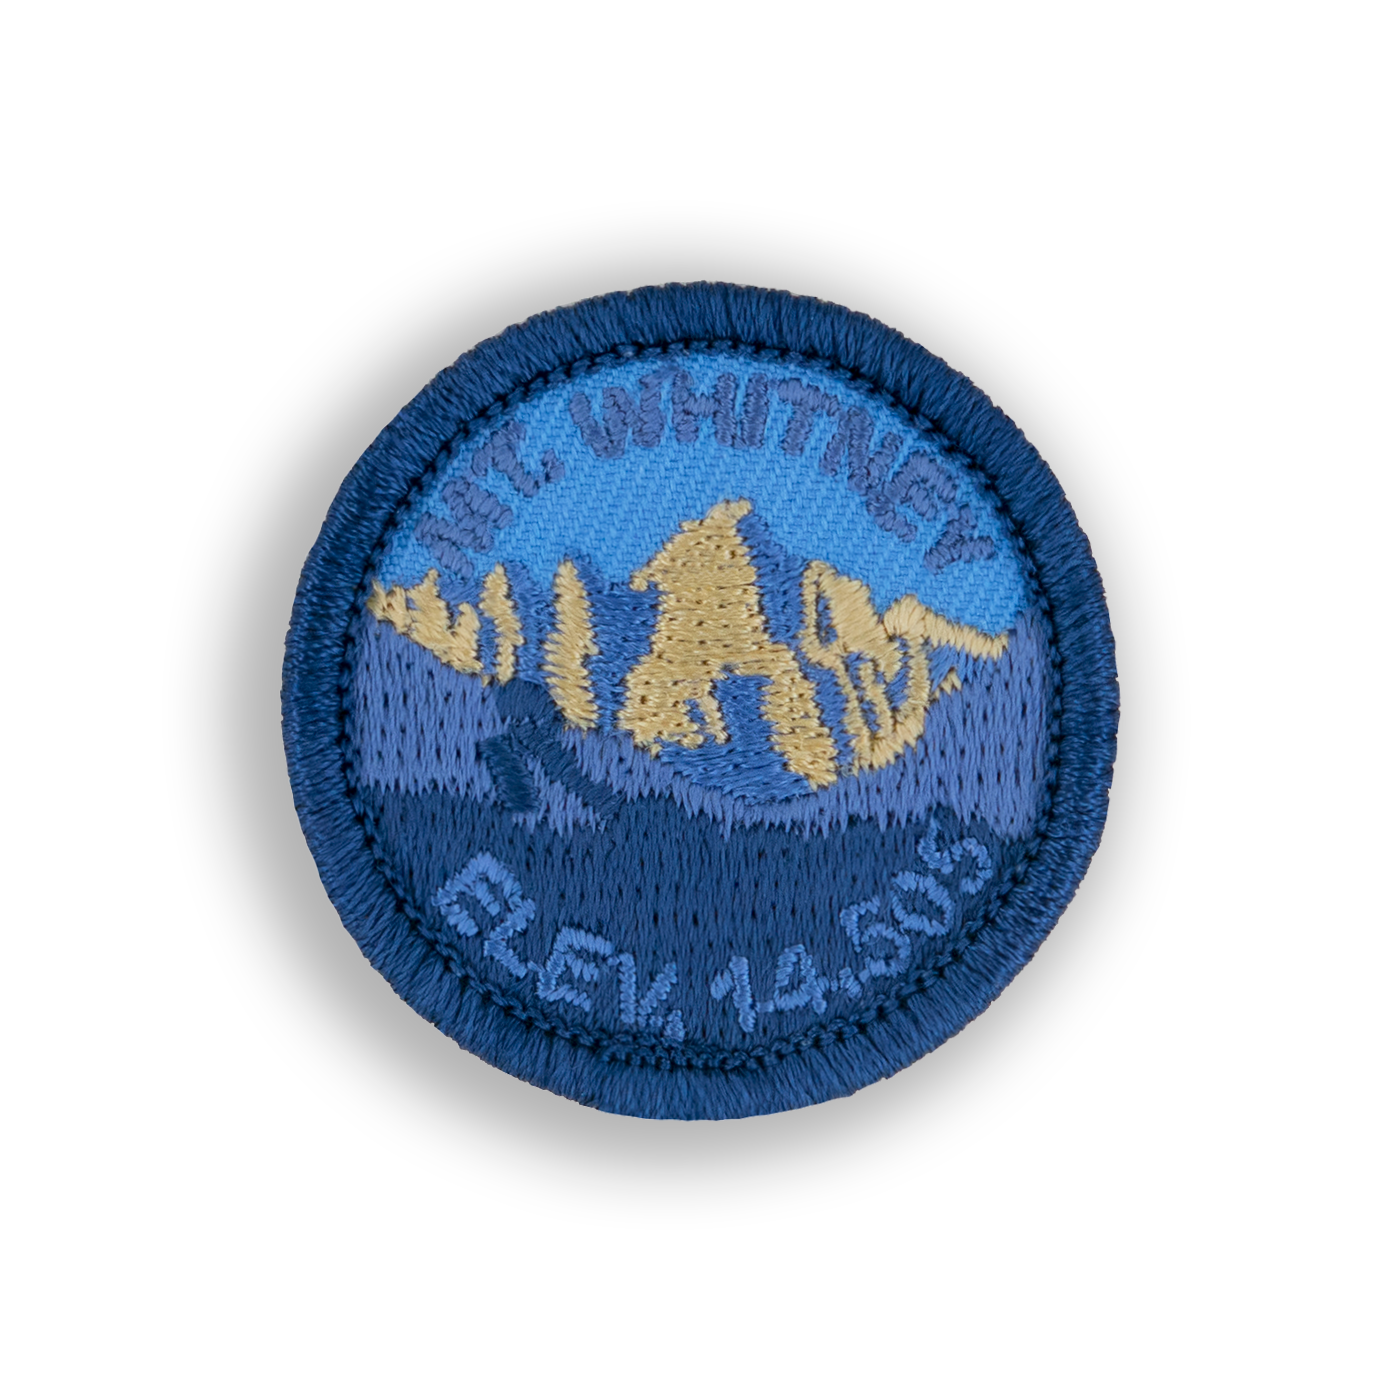 Mount Whitney Patch | Demerit Wear - Fake Merit Badges